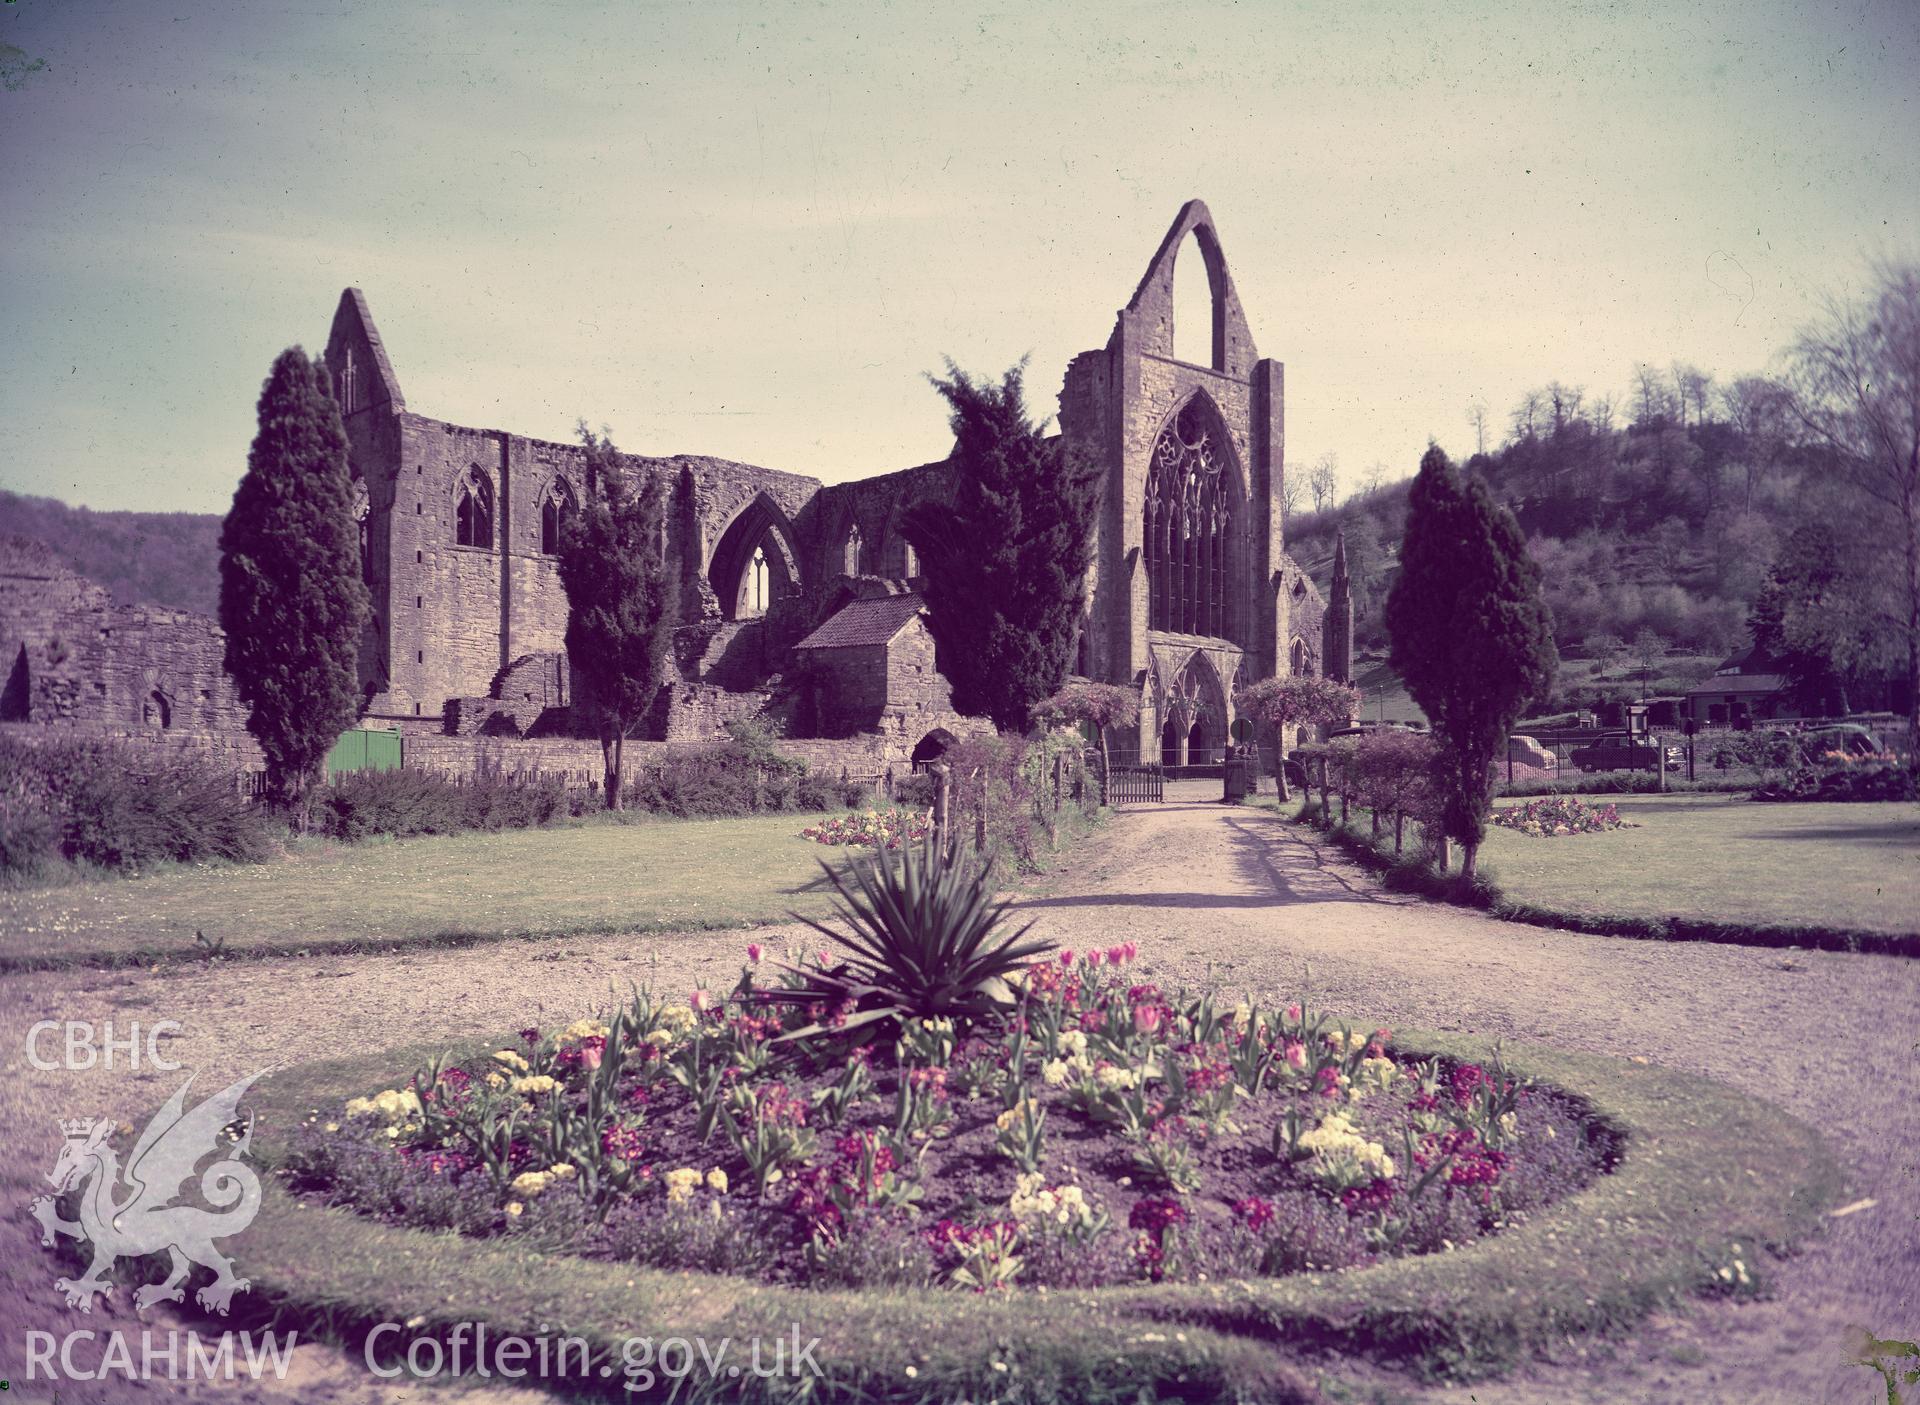 D.O.E. colour transparency of Tintern Abbey: exterior view.